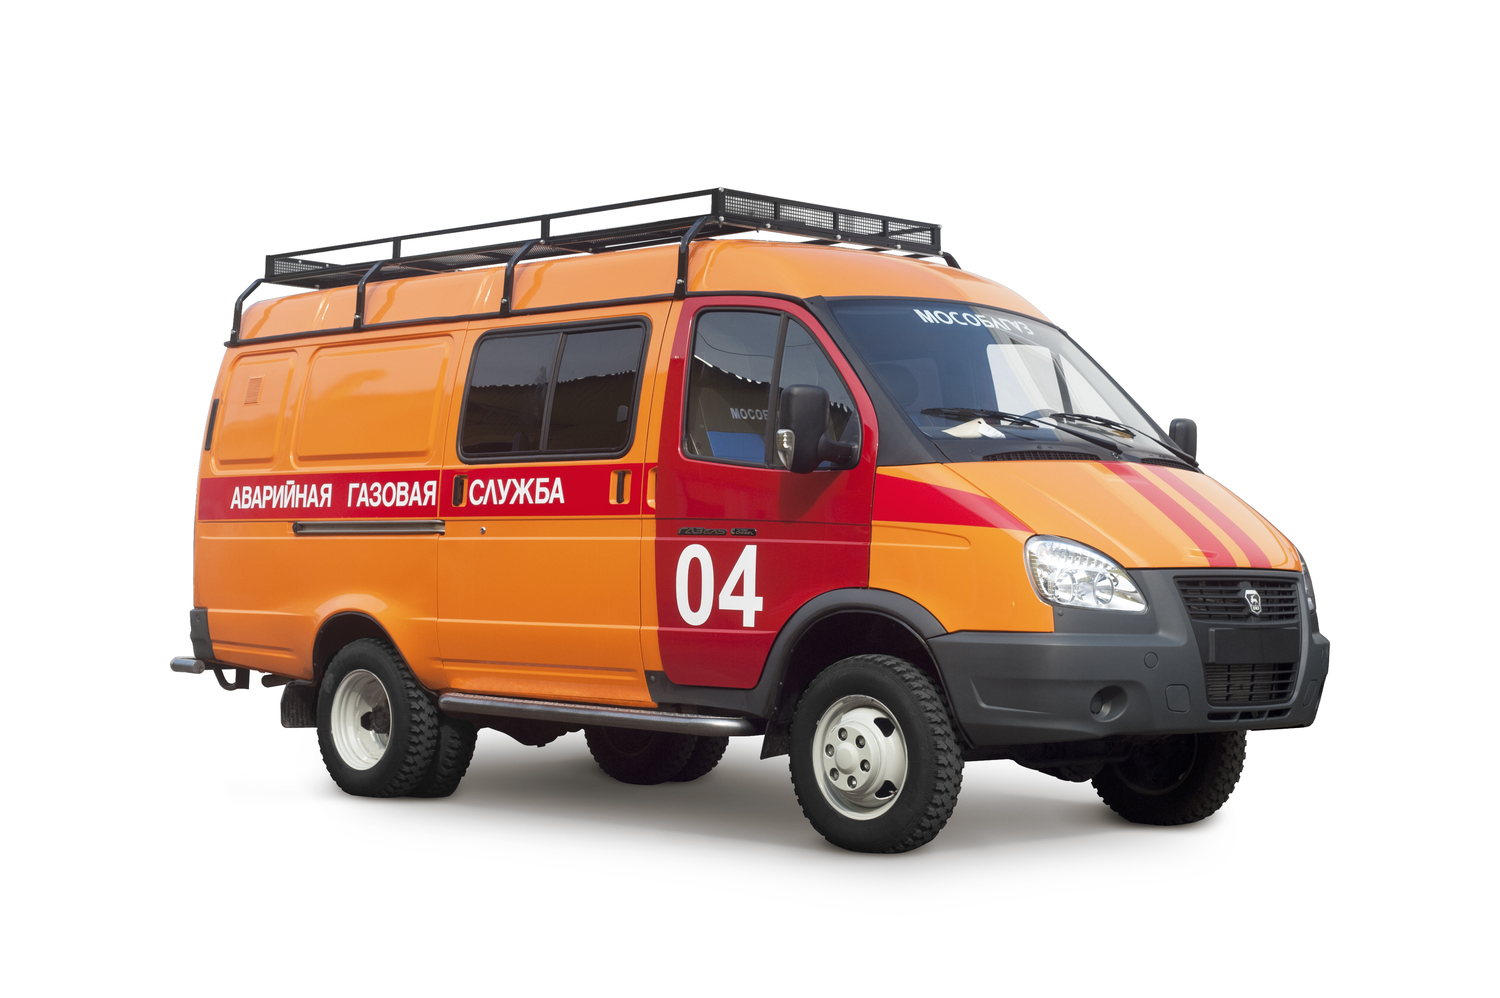 Доработка автомобиля на базе шасси ГАЗ 27057 до автомобиля «Аварийная газовая служба»